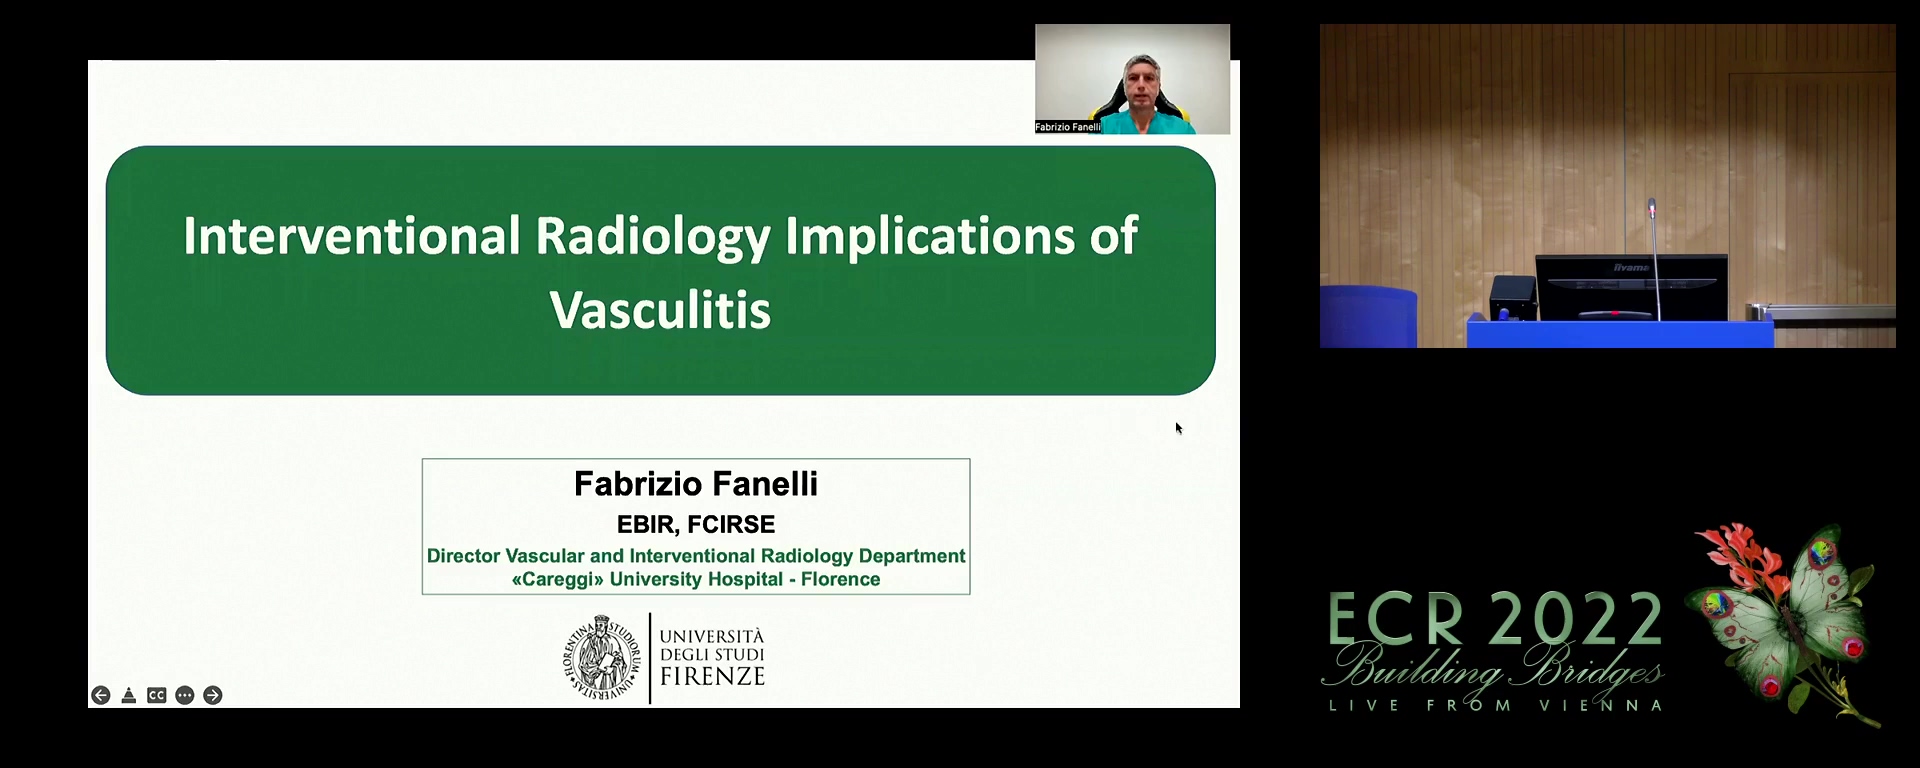 Interventional radiology implications of vasculitis